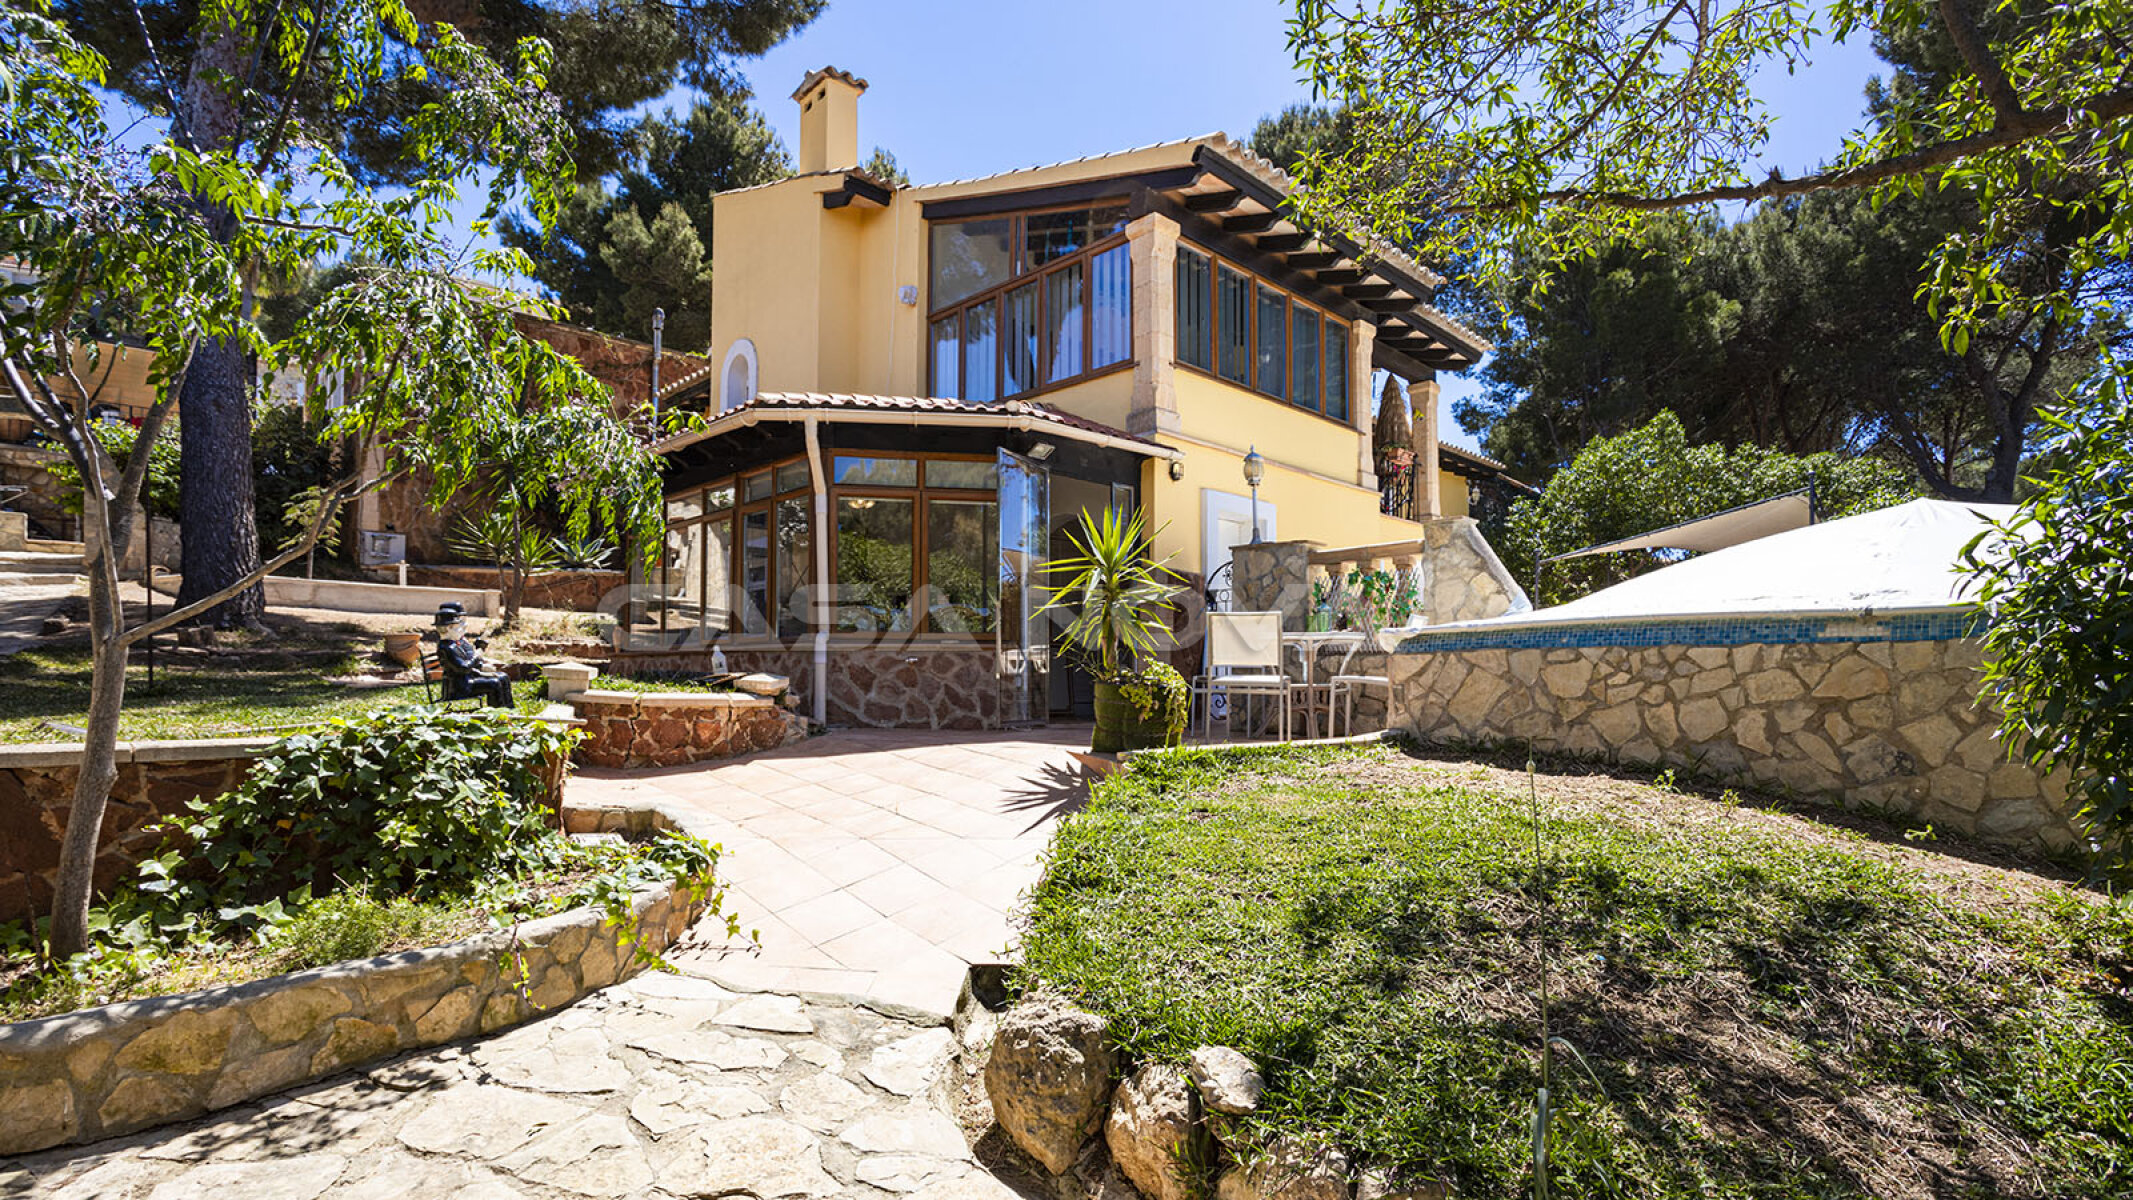 Mediterranean villa with natural stone elements